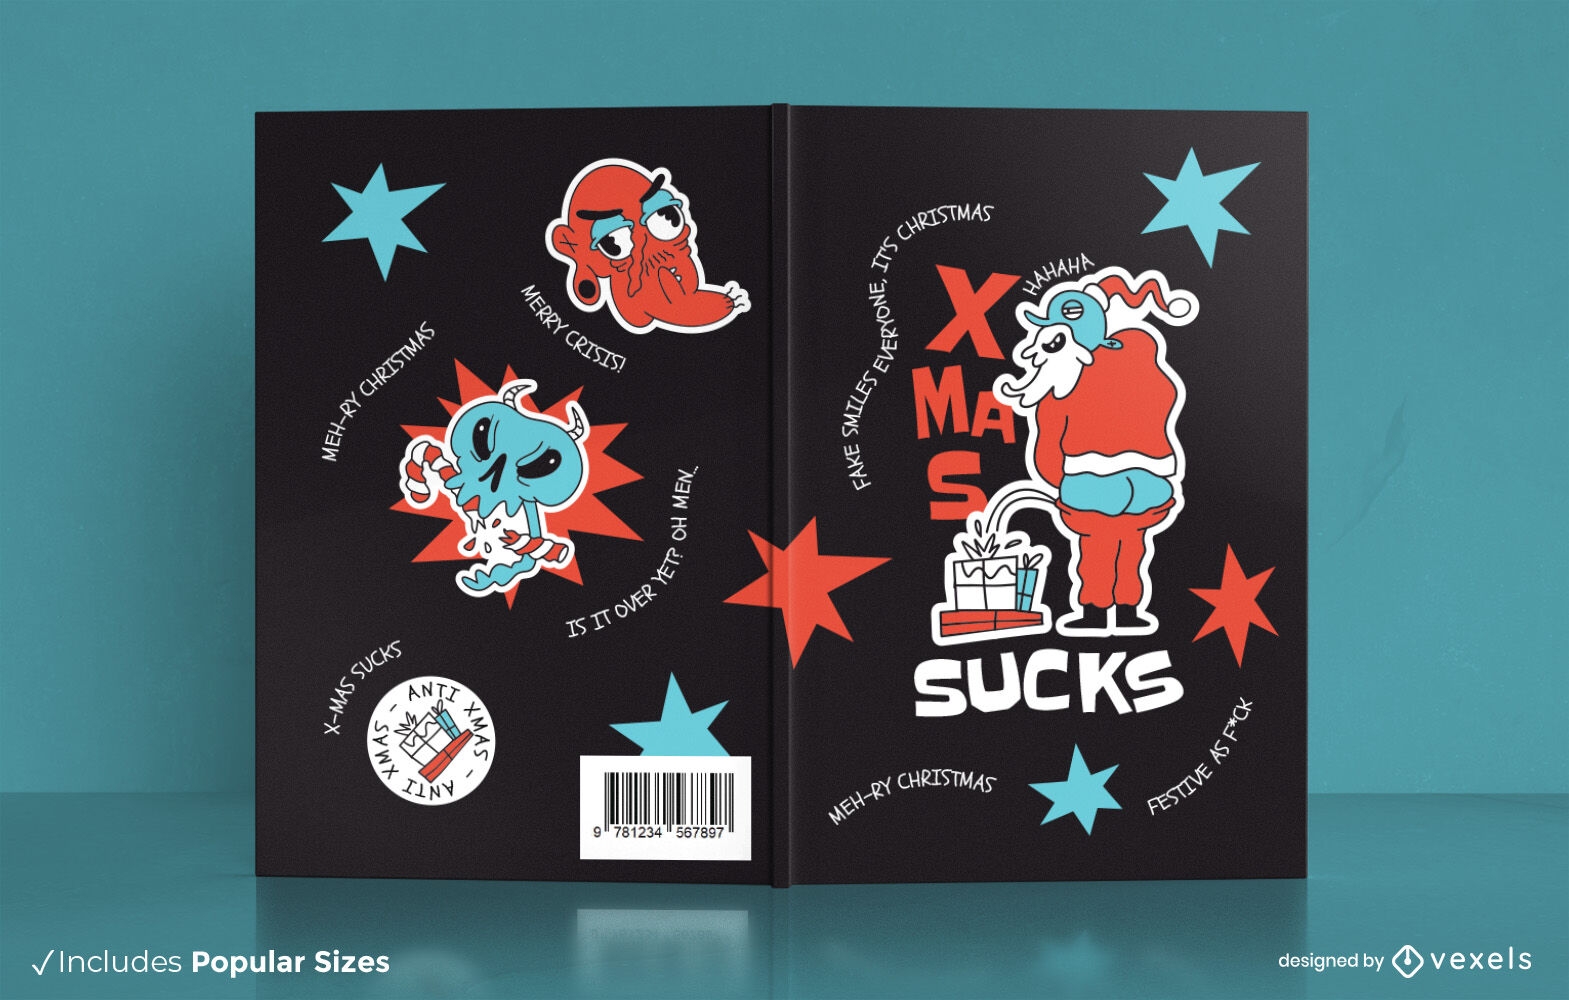 Xmas sucks book cover design